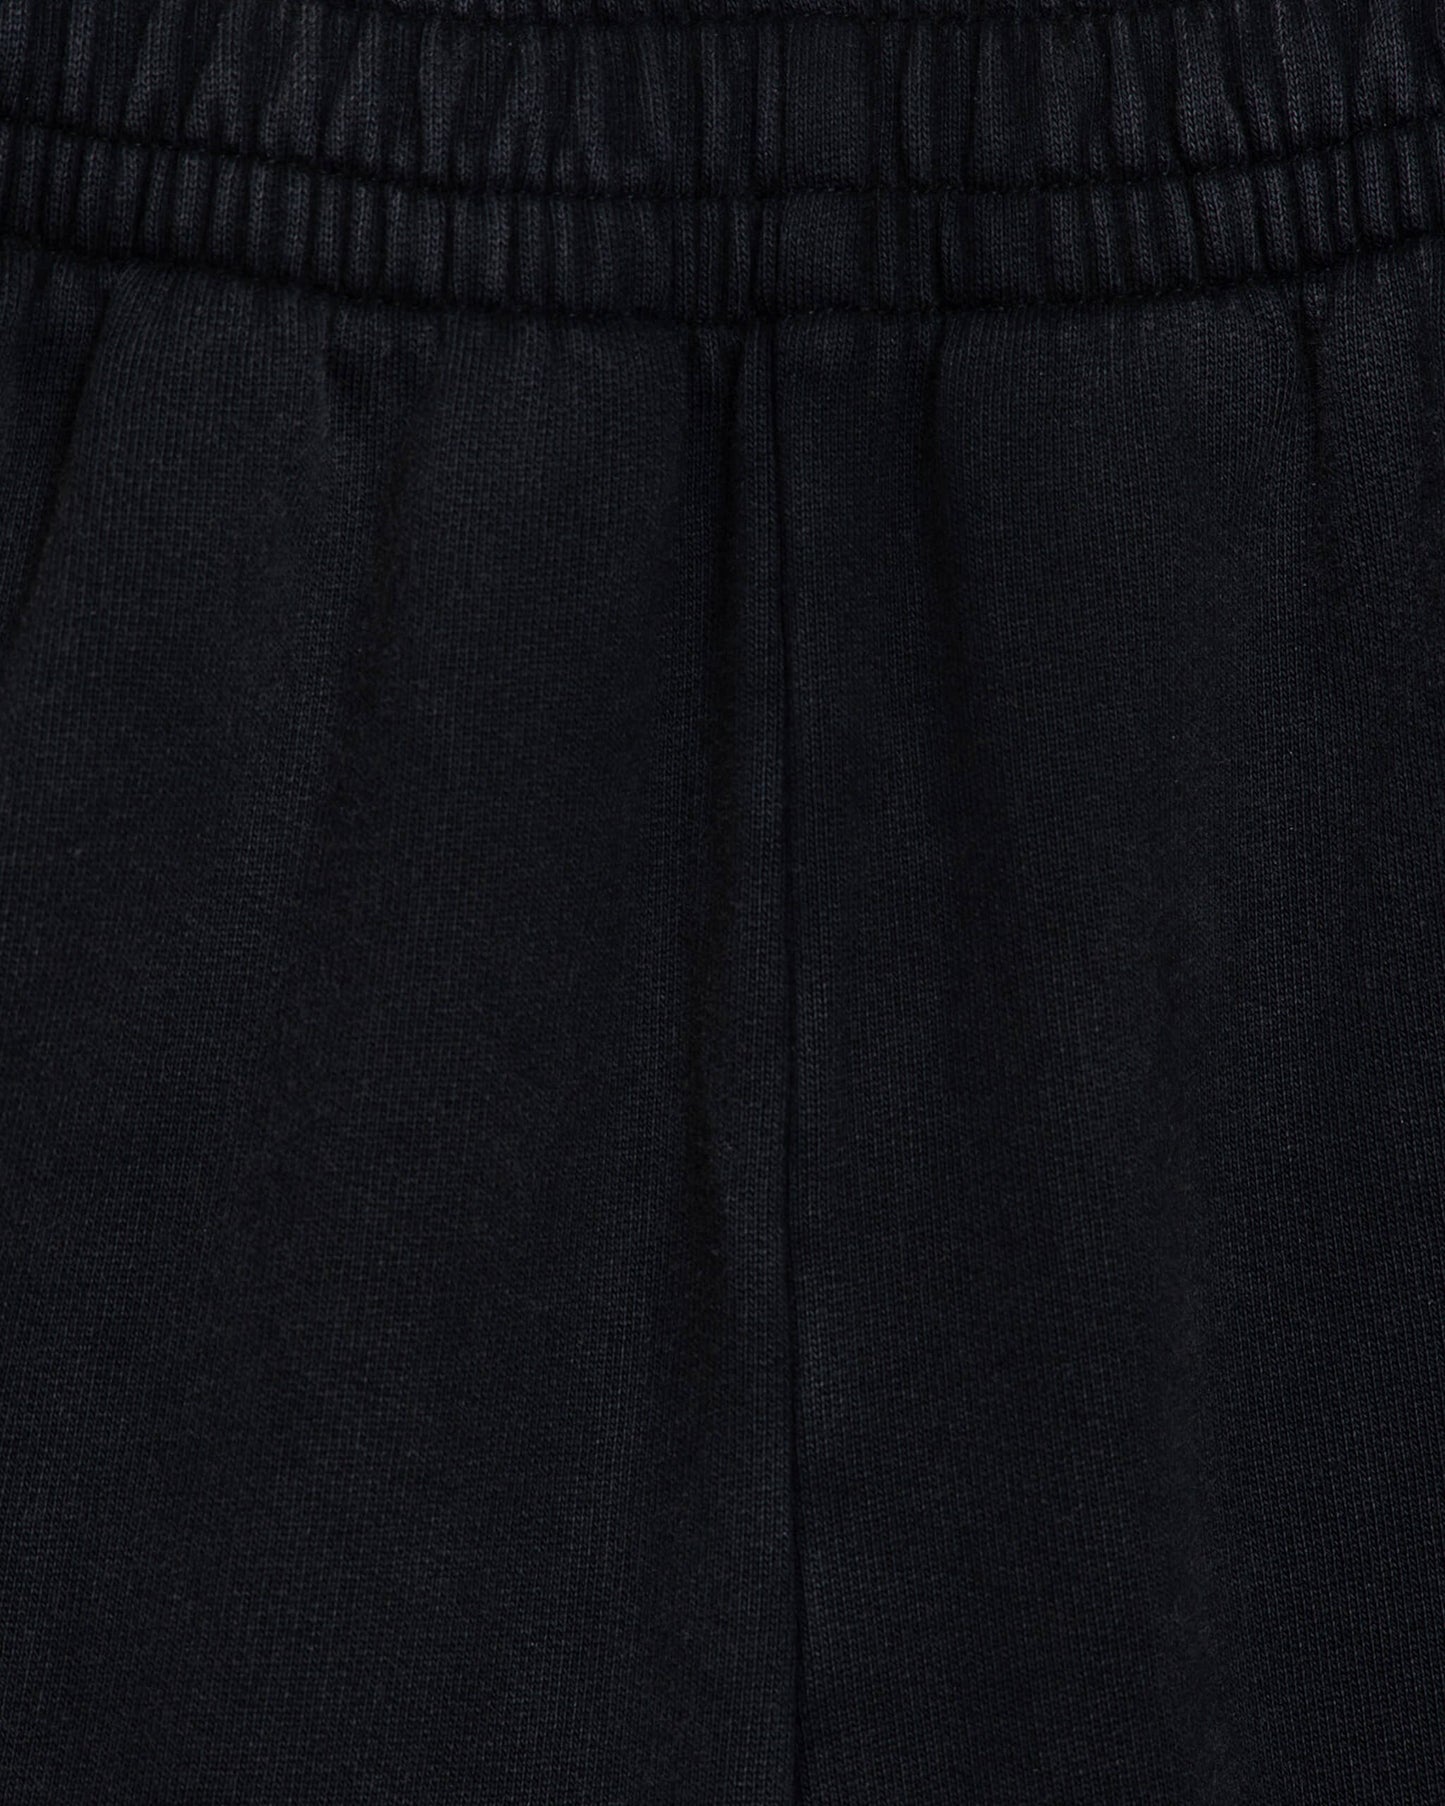 Vintage Black Sweatpants